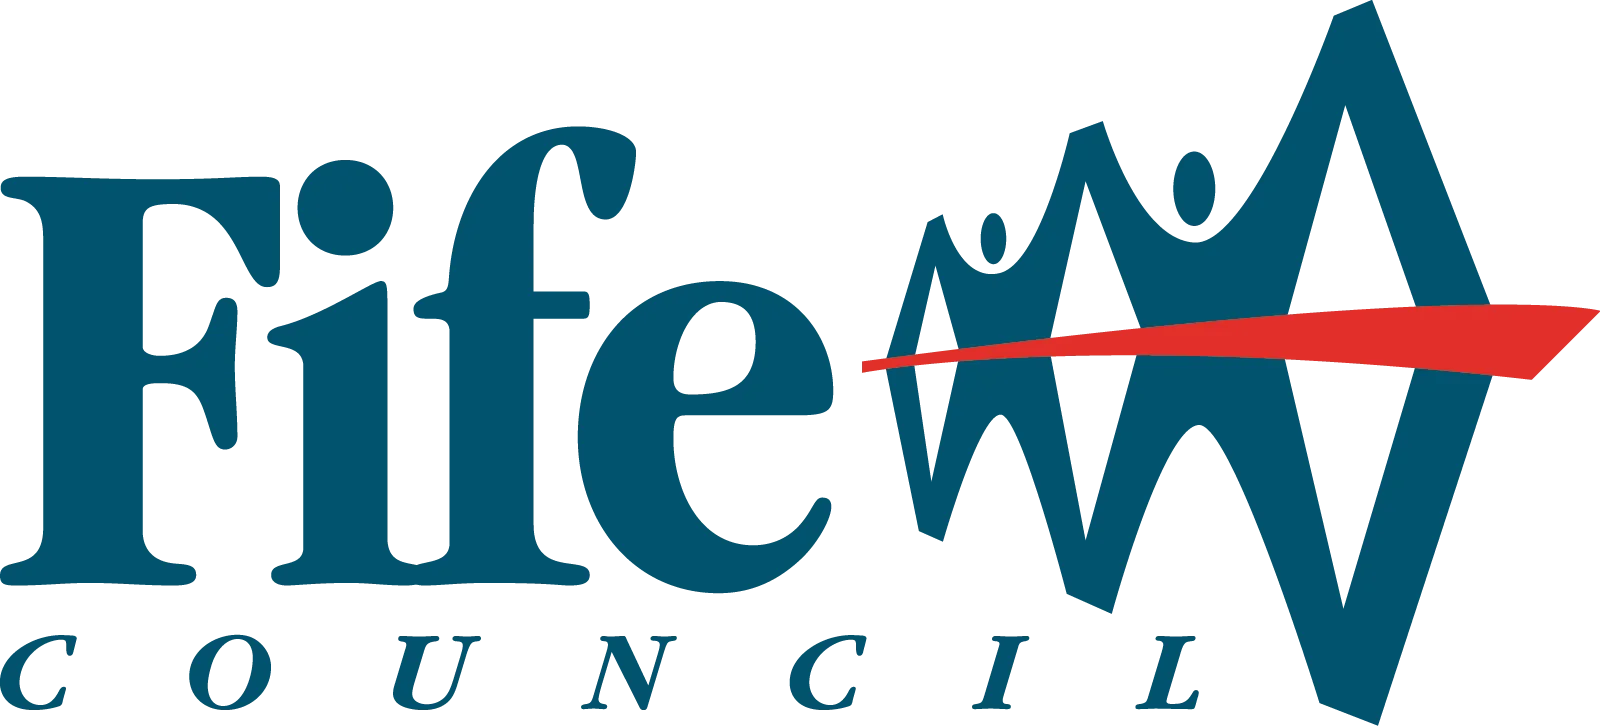 Fife council